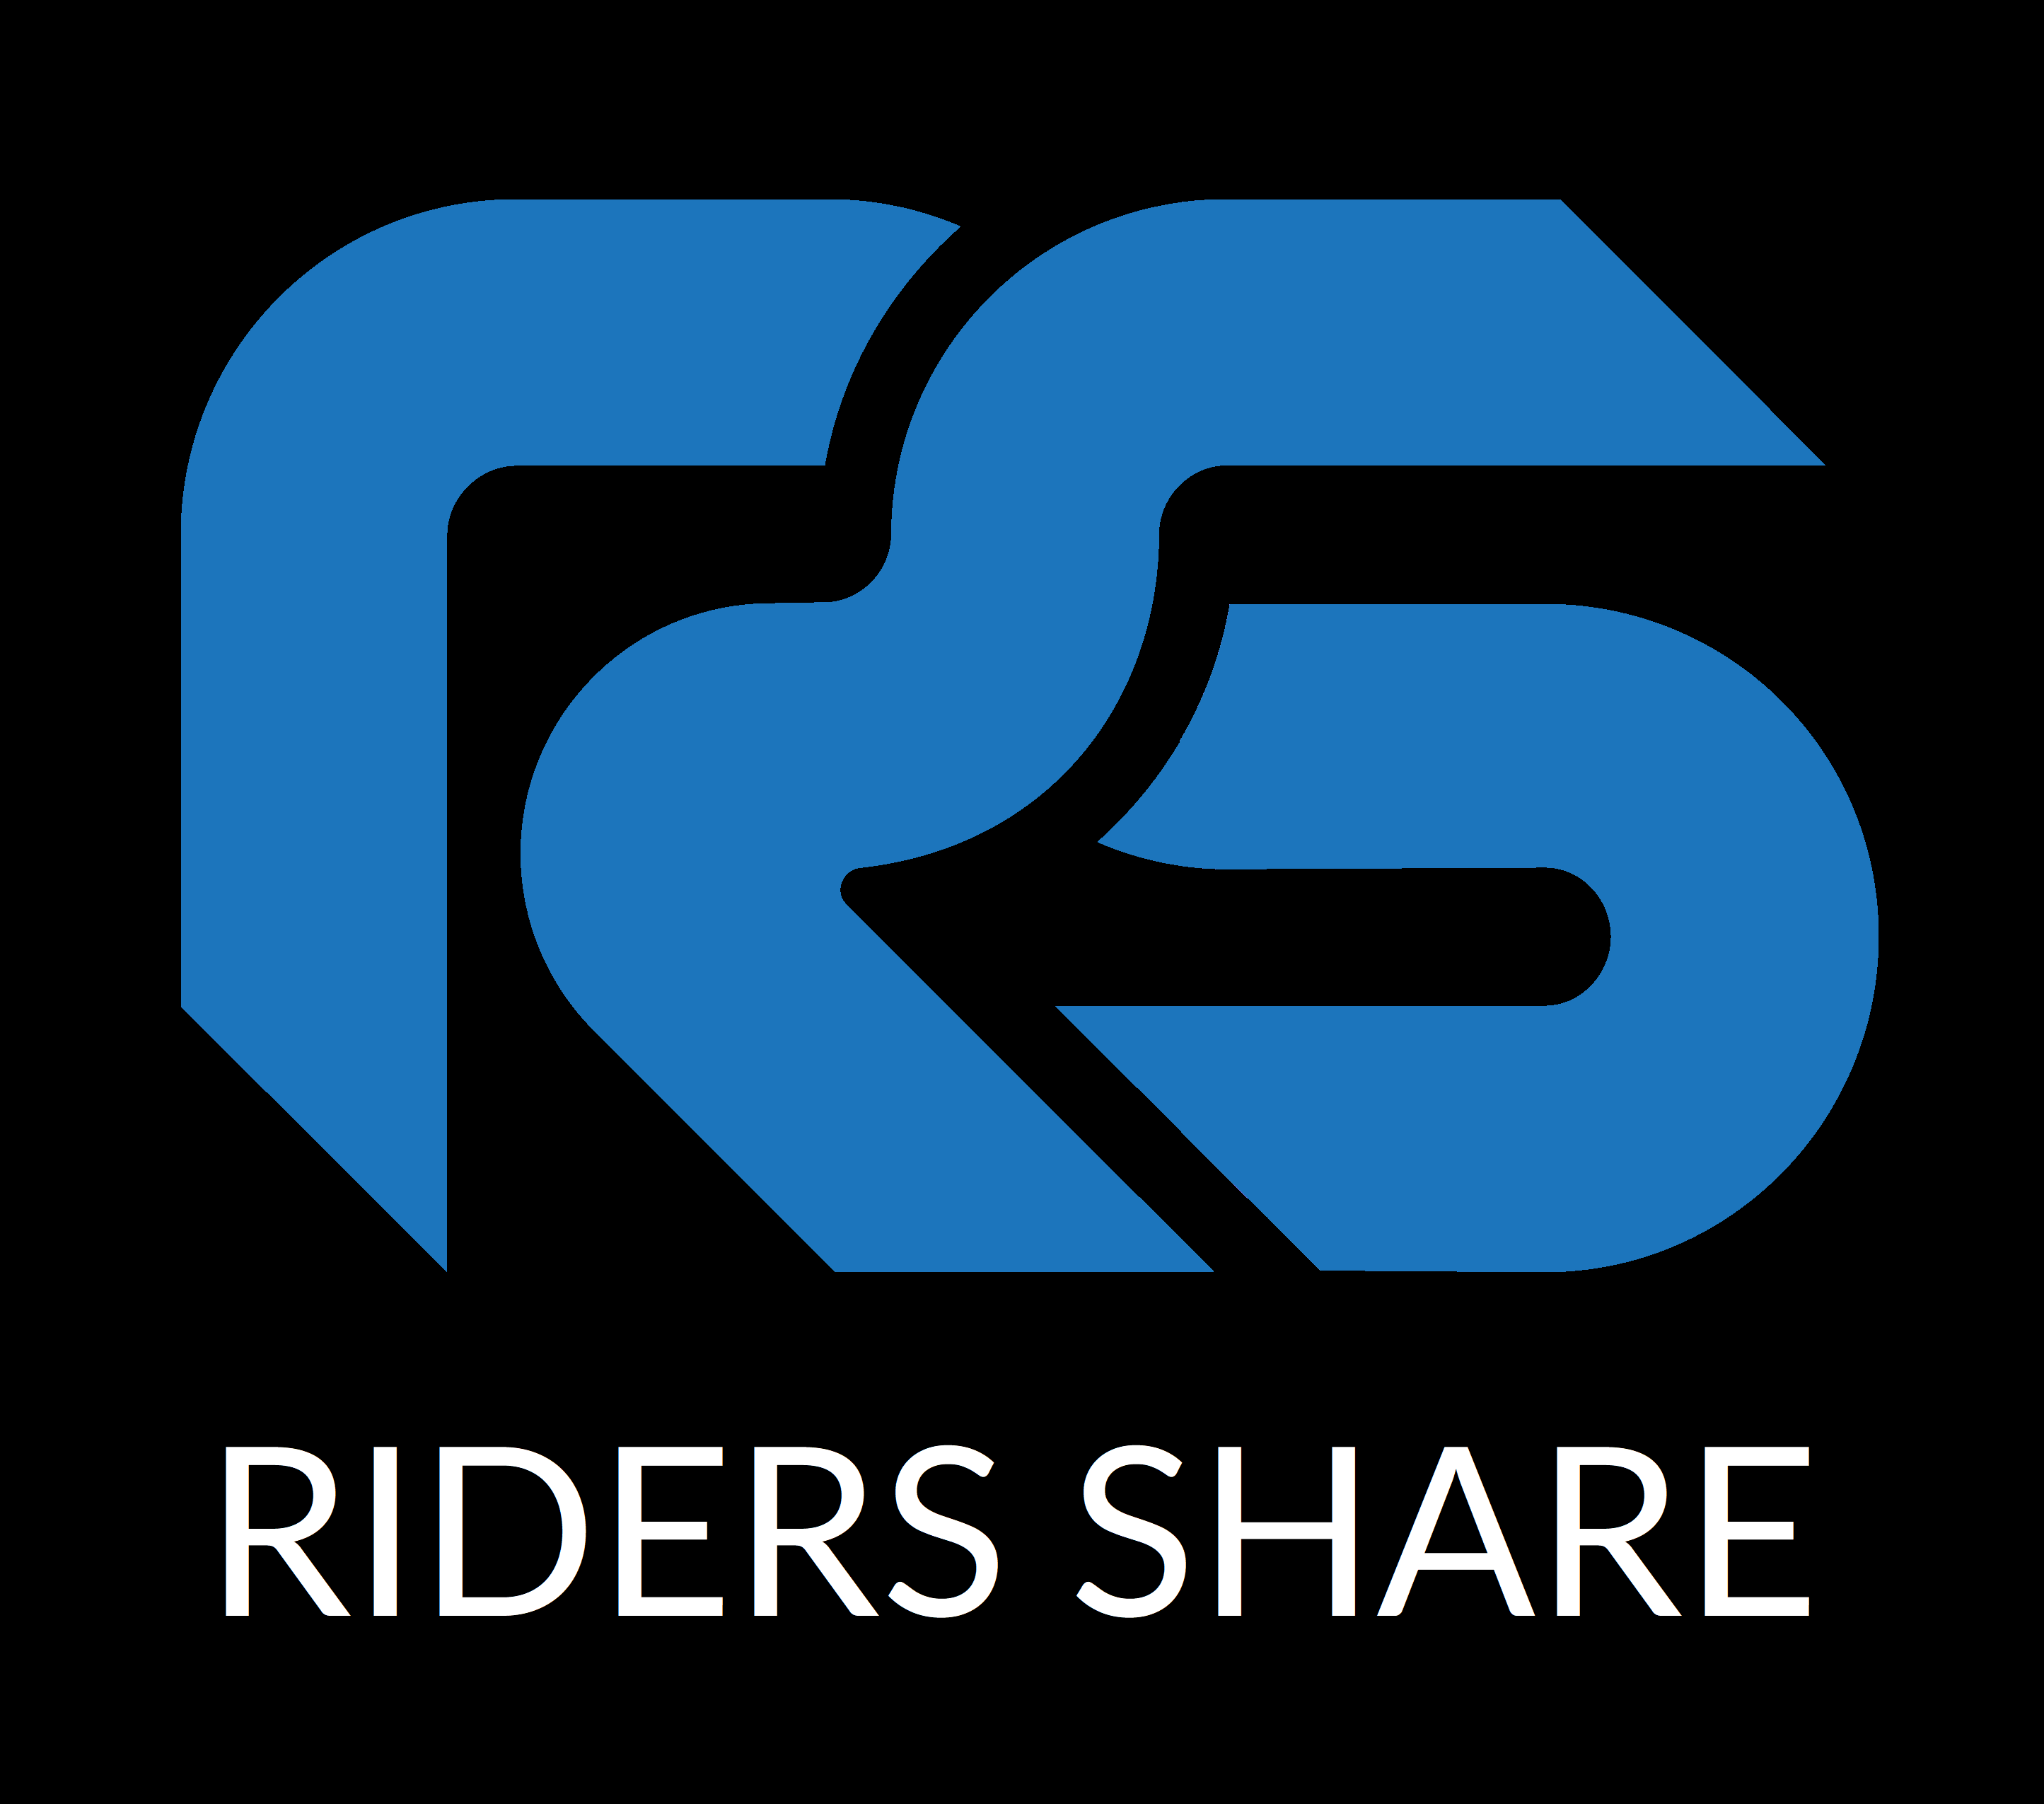 Riders Share logo